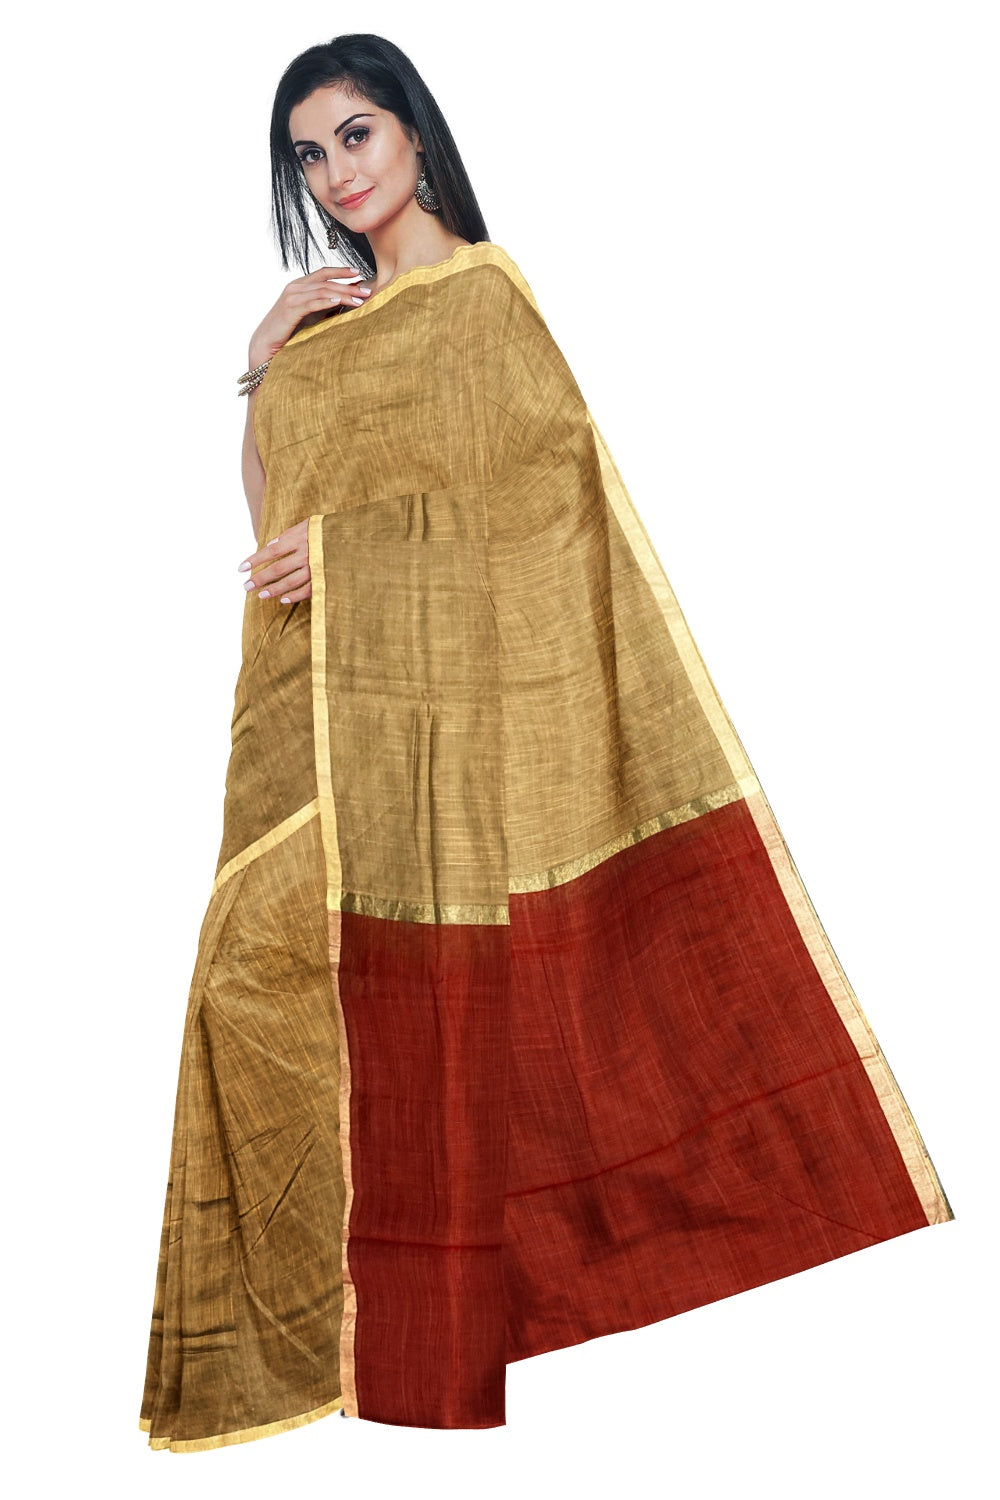 Southloom Kosa / Tussar Work Designer Brownish Gold Saree With Maroon Pallu